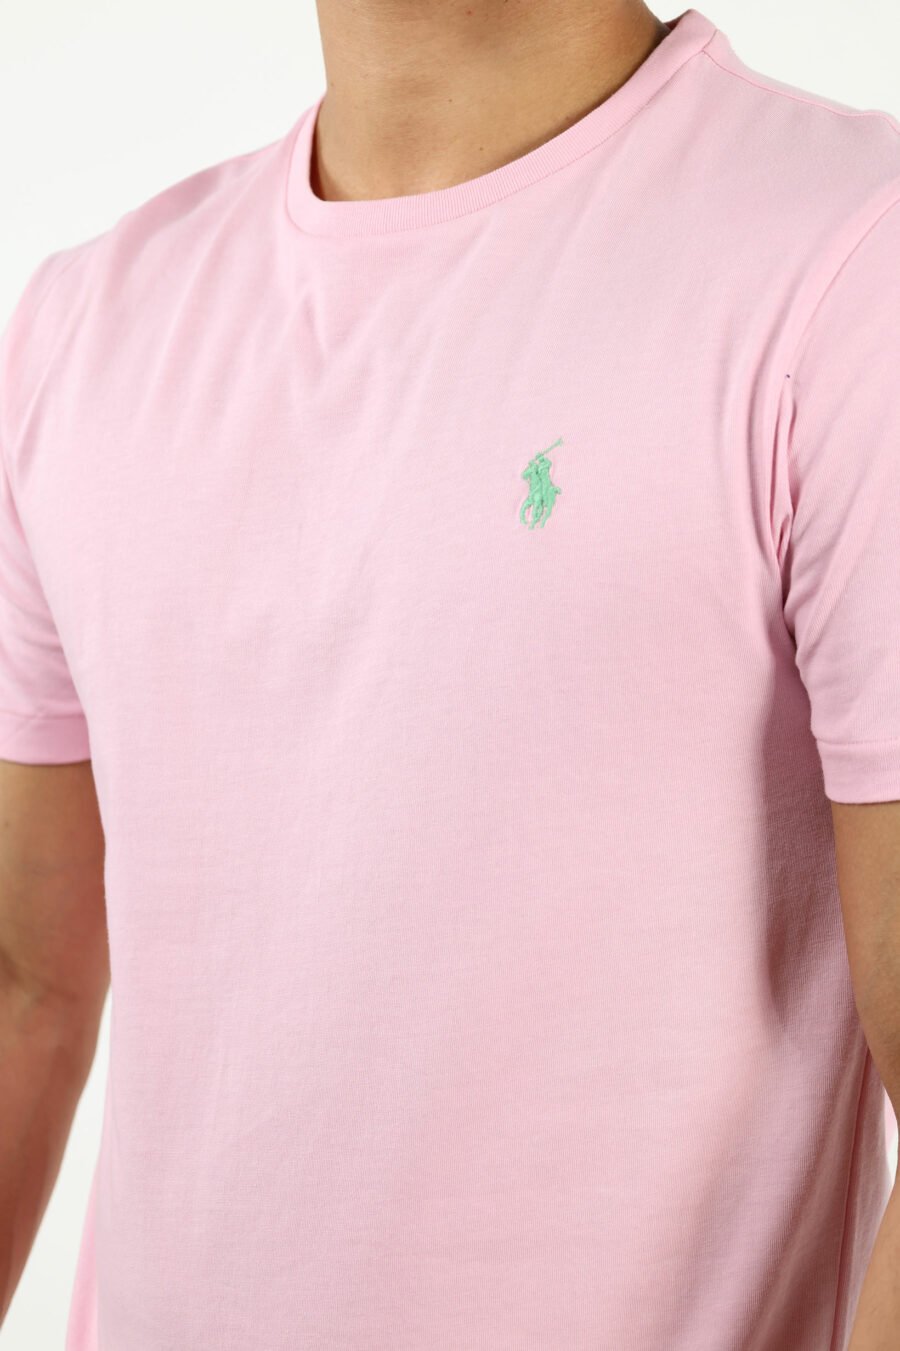 Camiseta rosa con minilogo "polo" verde - number14057